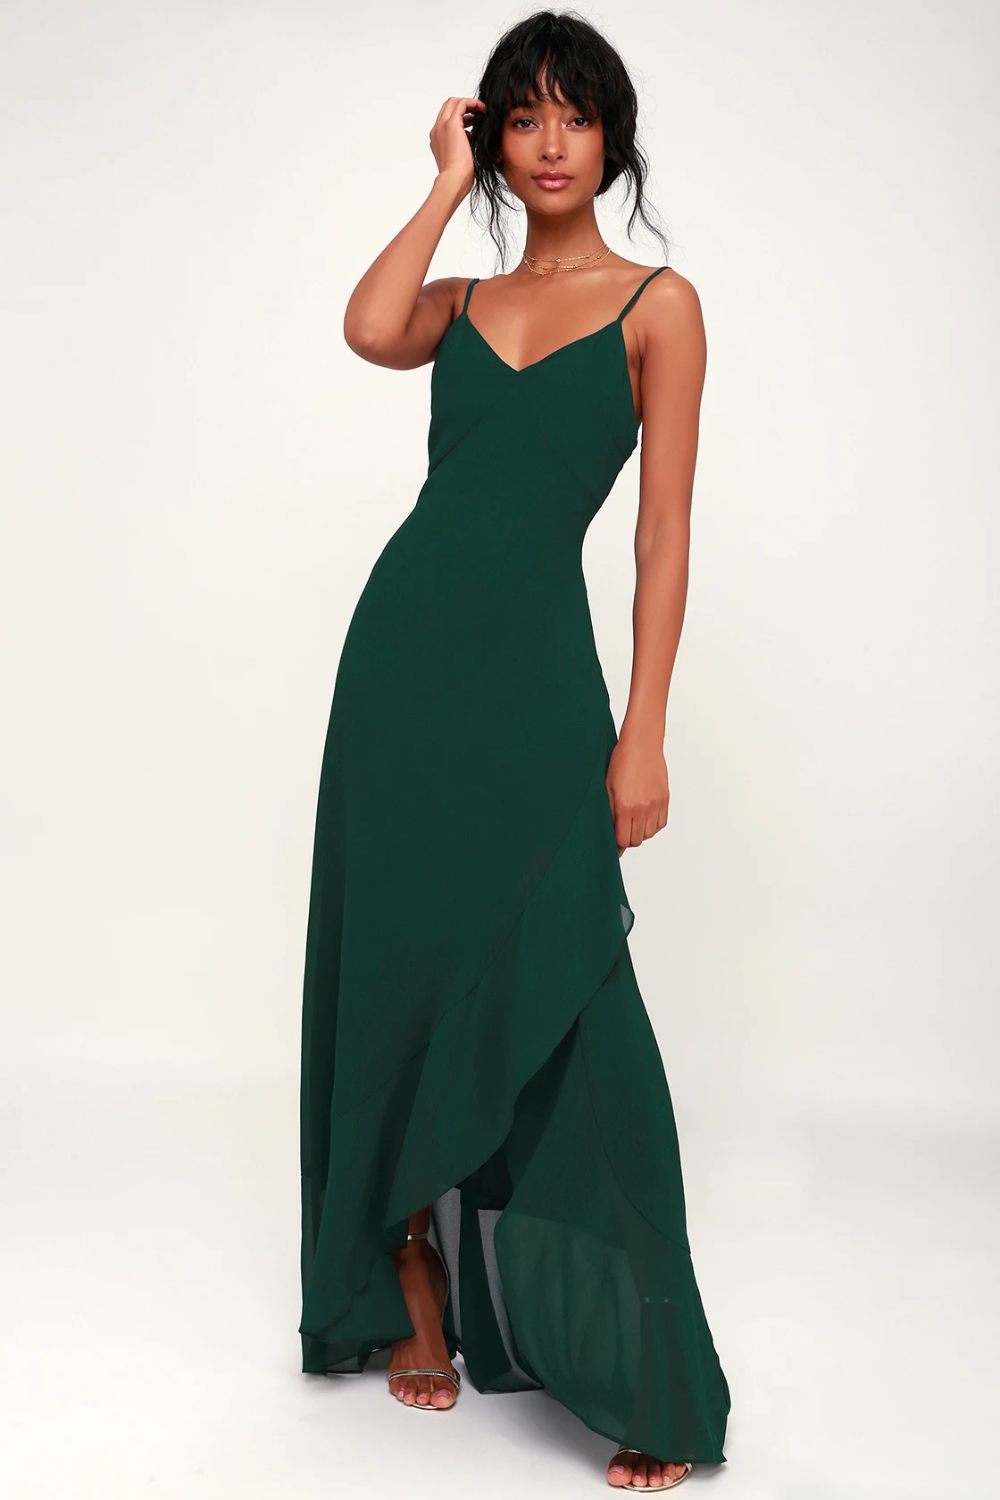 dark-green-dress 60+ Most Fashionable Semi Formal Wedding Dresses for Female Guests